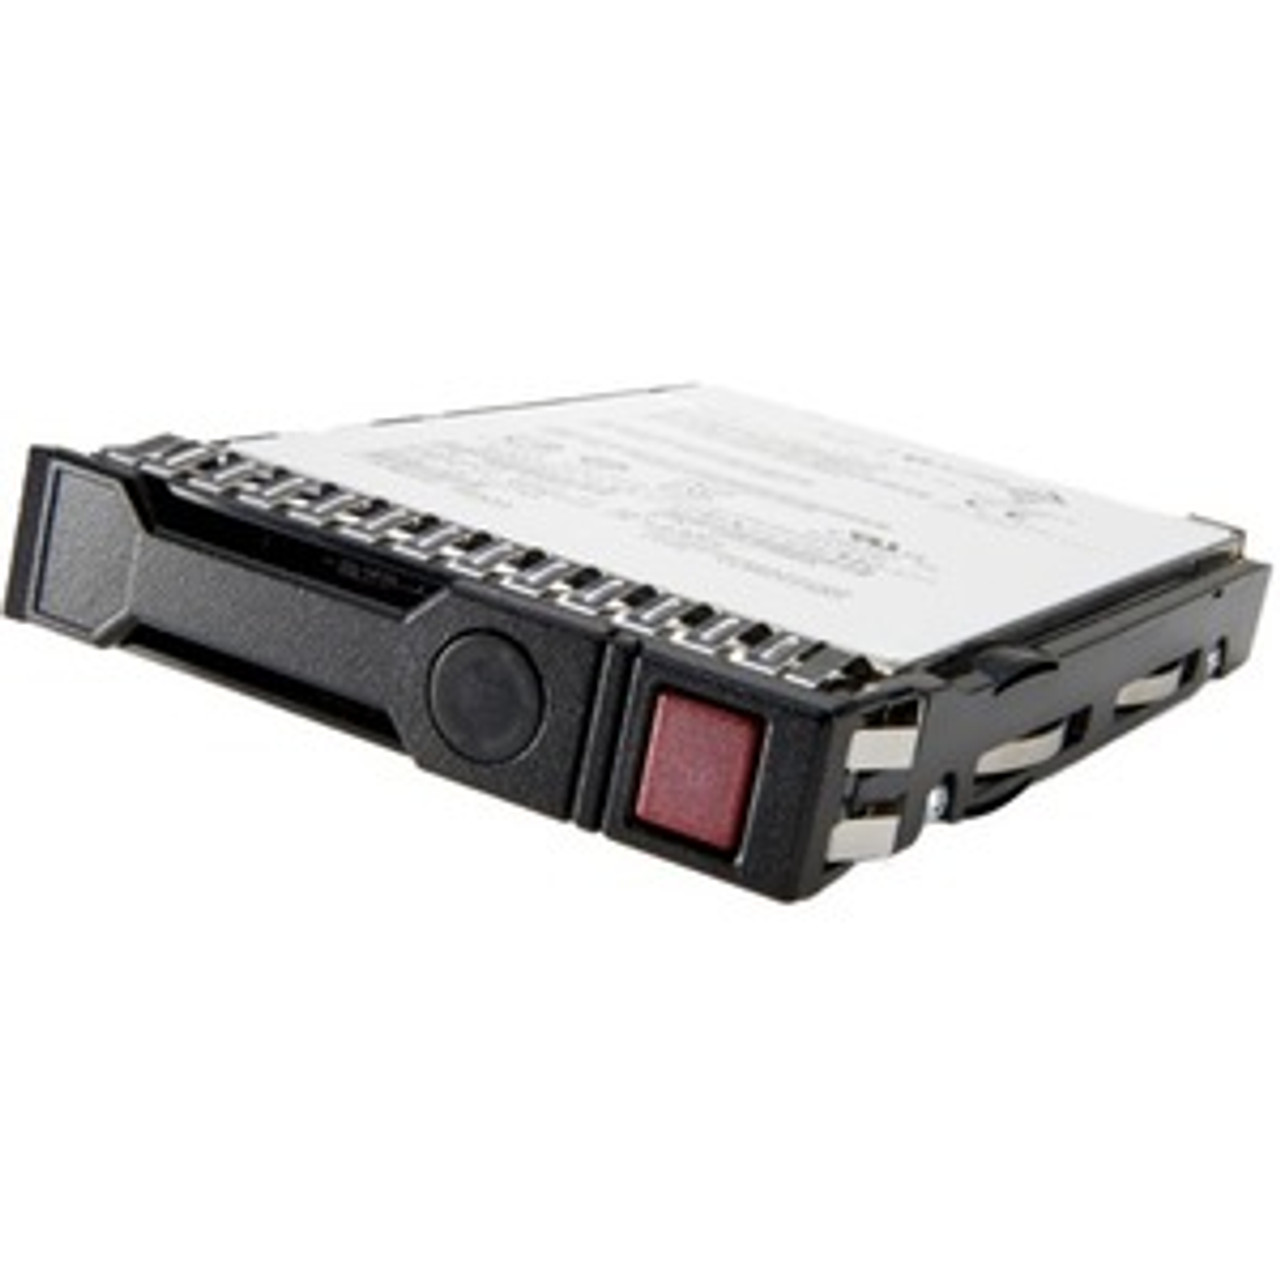 872475-K21#0D1 HPE 300GB 10000RPM SAS 12Gbps 2.5-inch Internal Hard Drive